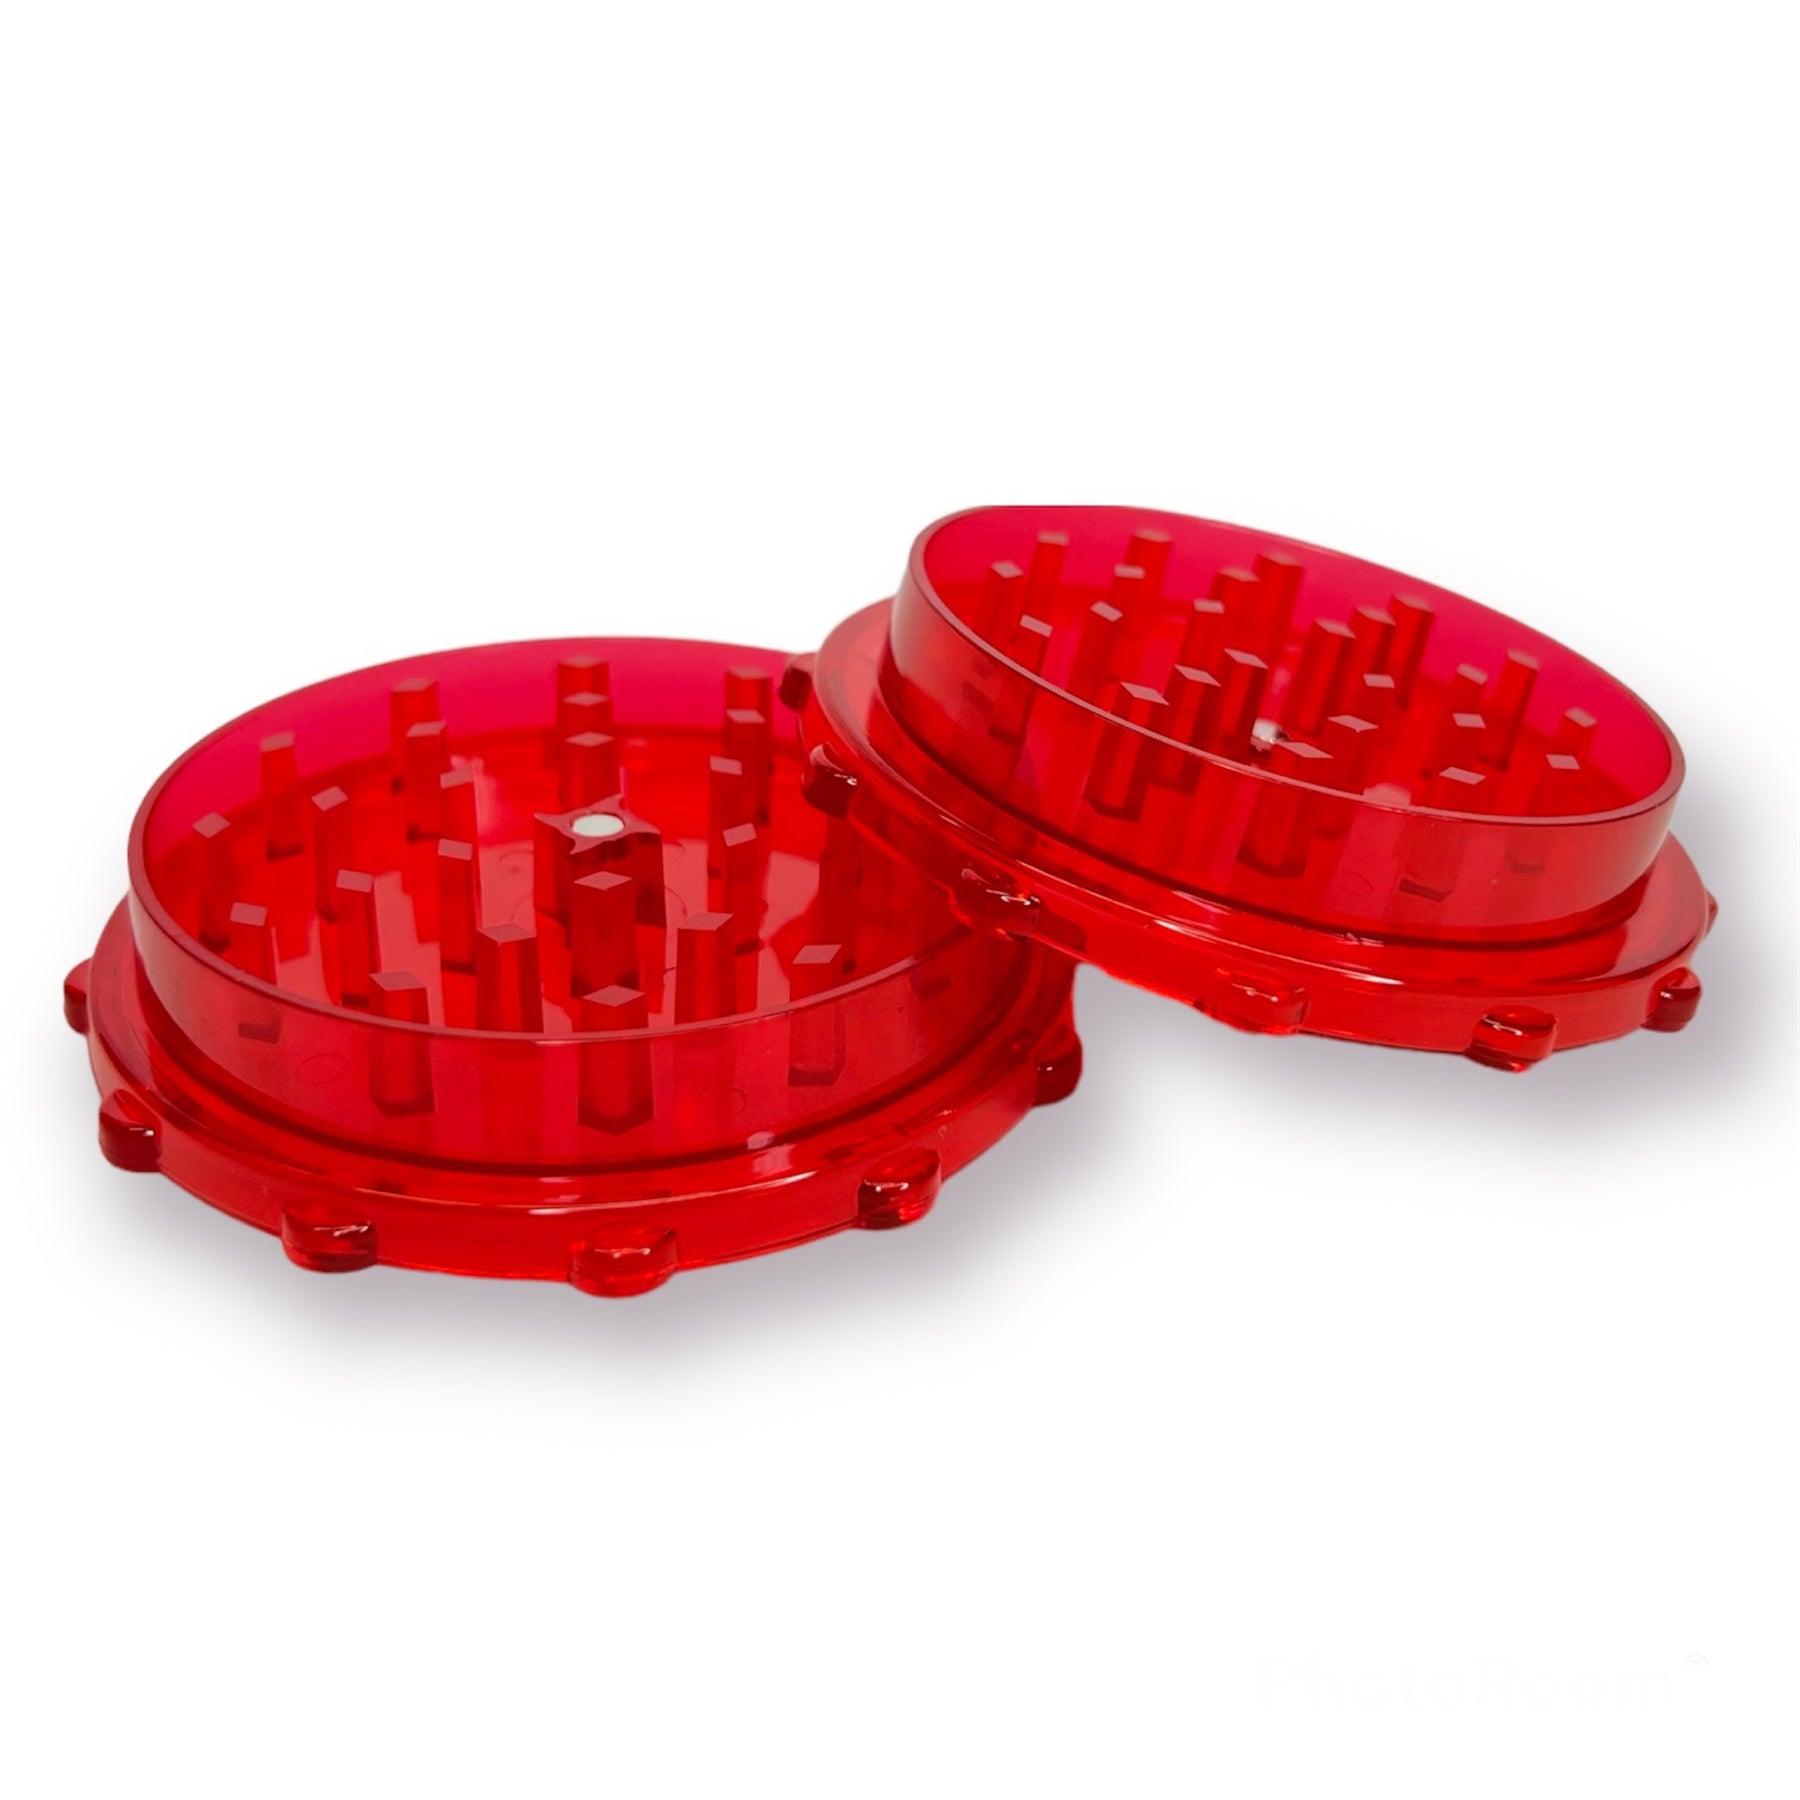 2 Piece Grinder with Magnet - Red Color